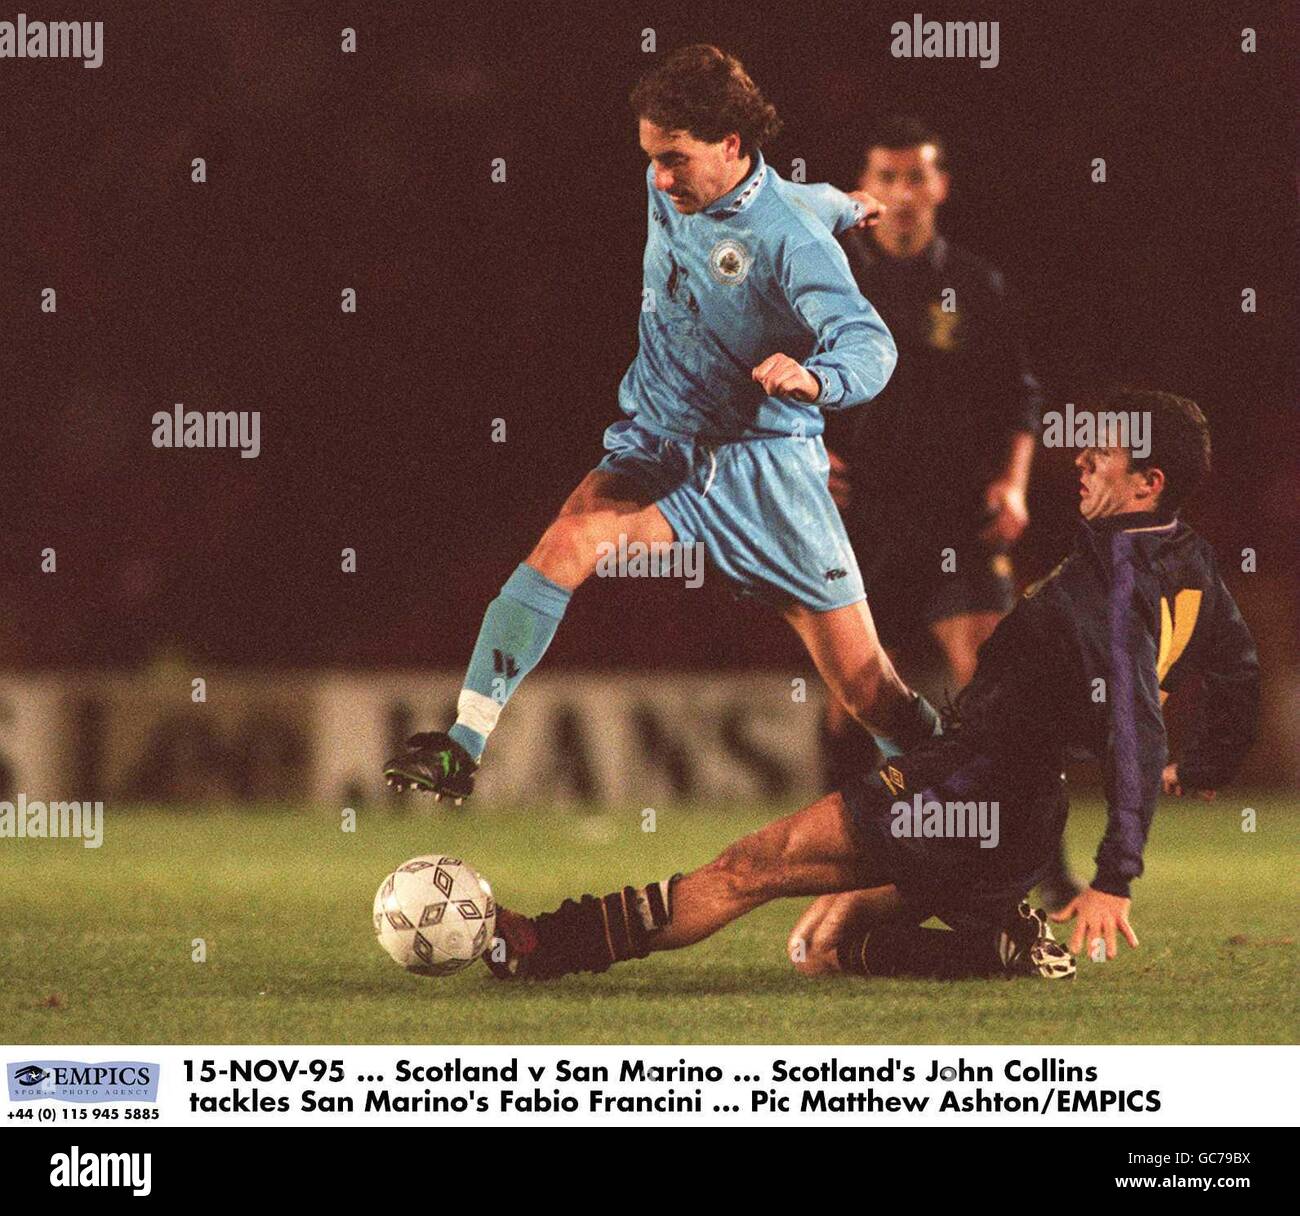 15-NOV-95. Scotland v San Marino. Scotland's John Collins tackles San Marino's Fabio Francini Stock Photo